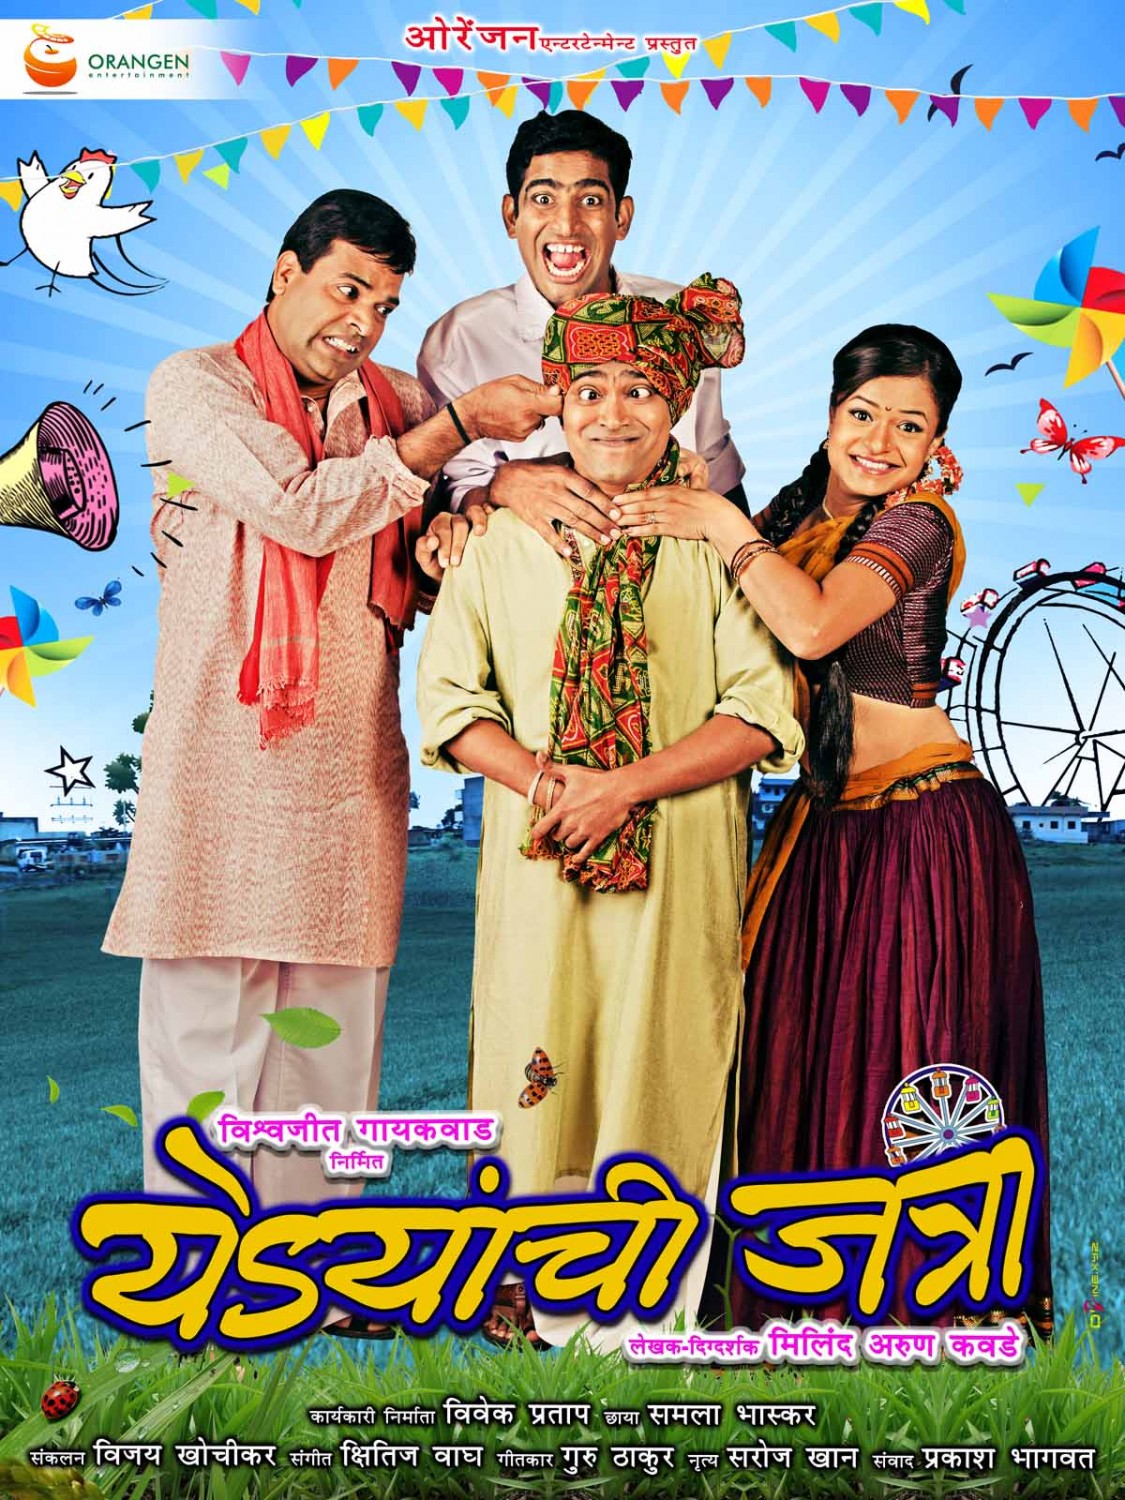 Extra Large Movie Poster Image for Yedyanchi Jatraa (#6 of 7)